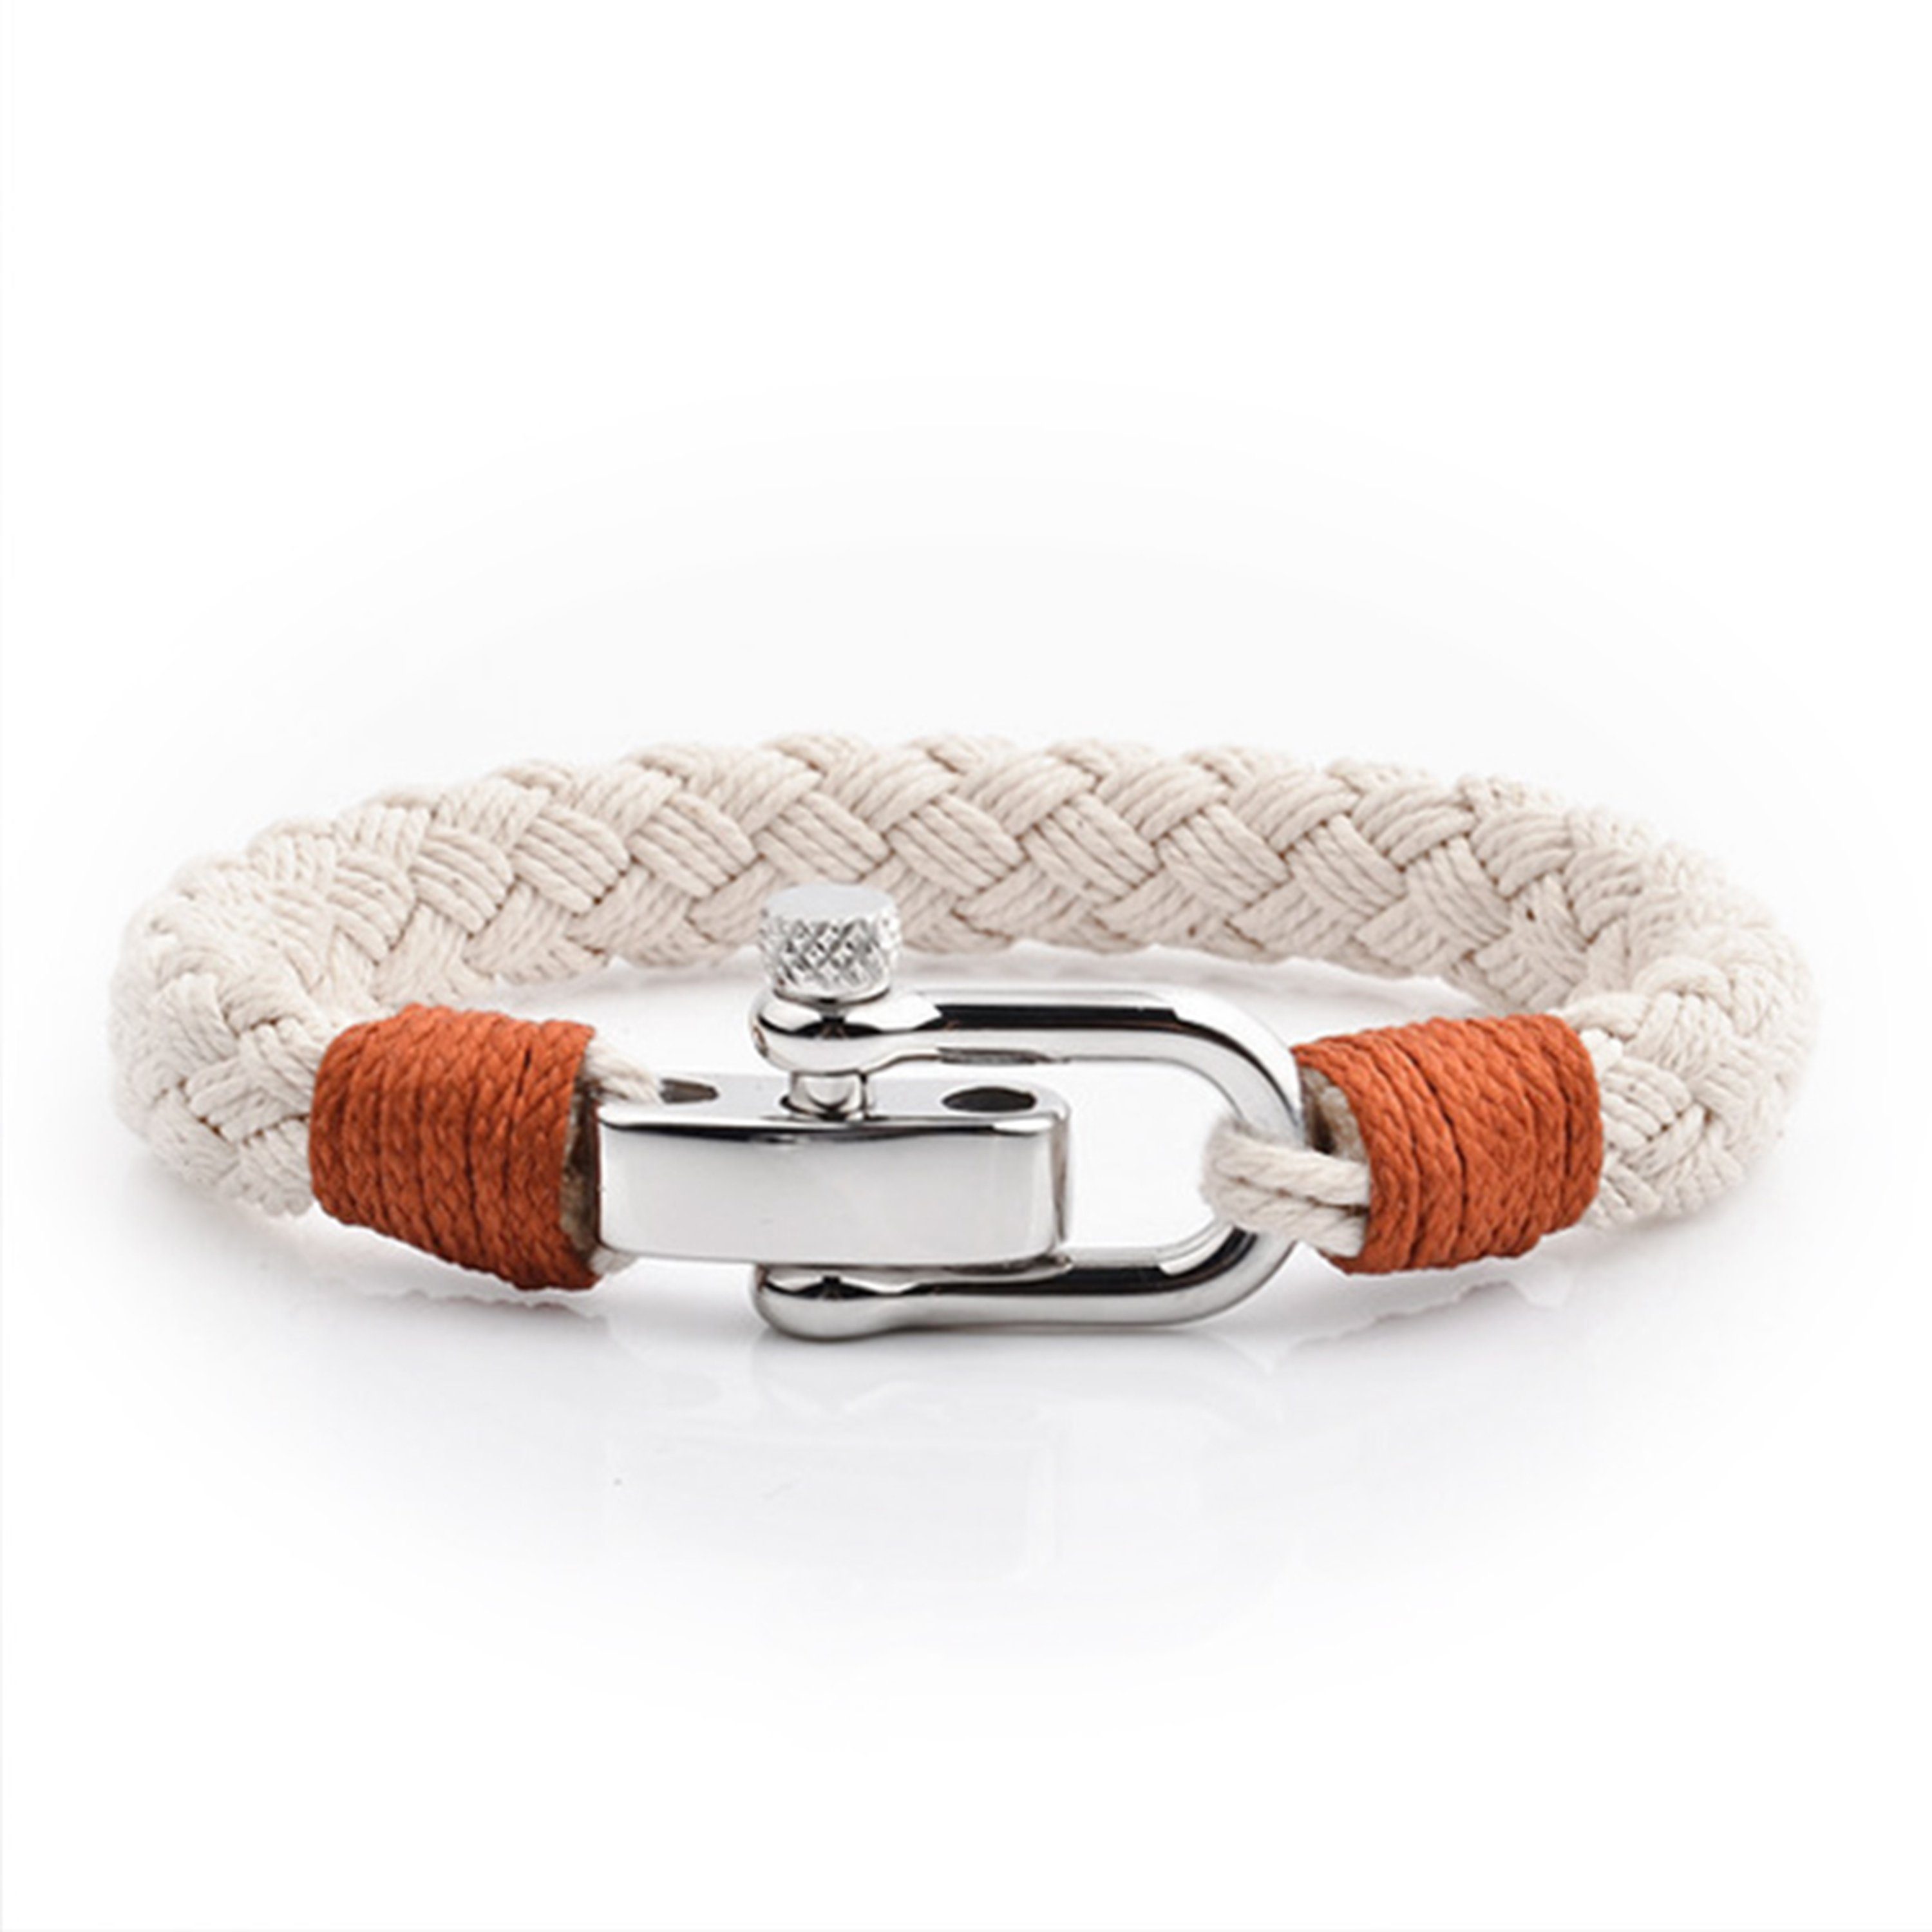 UNIQAL.de "RONA" Segeltau, Style, Armband verschluss Armband handgefertigt) aus Segeltau Schäckel Maritime Casual (Edelstahl, nautics,